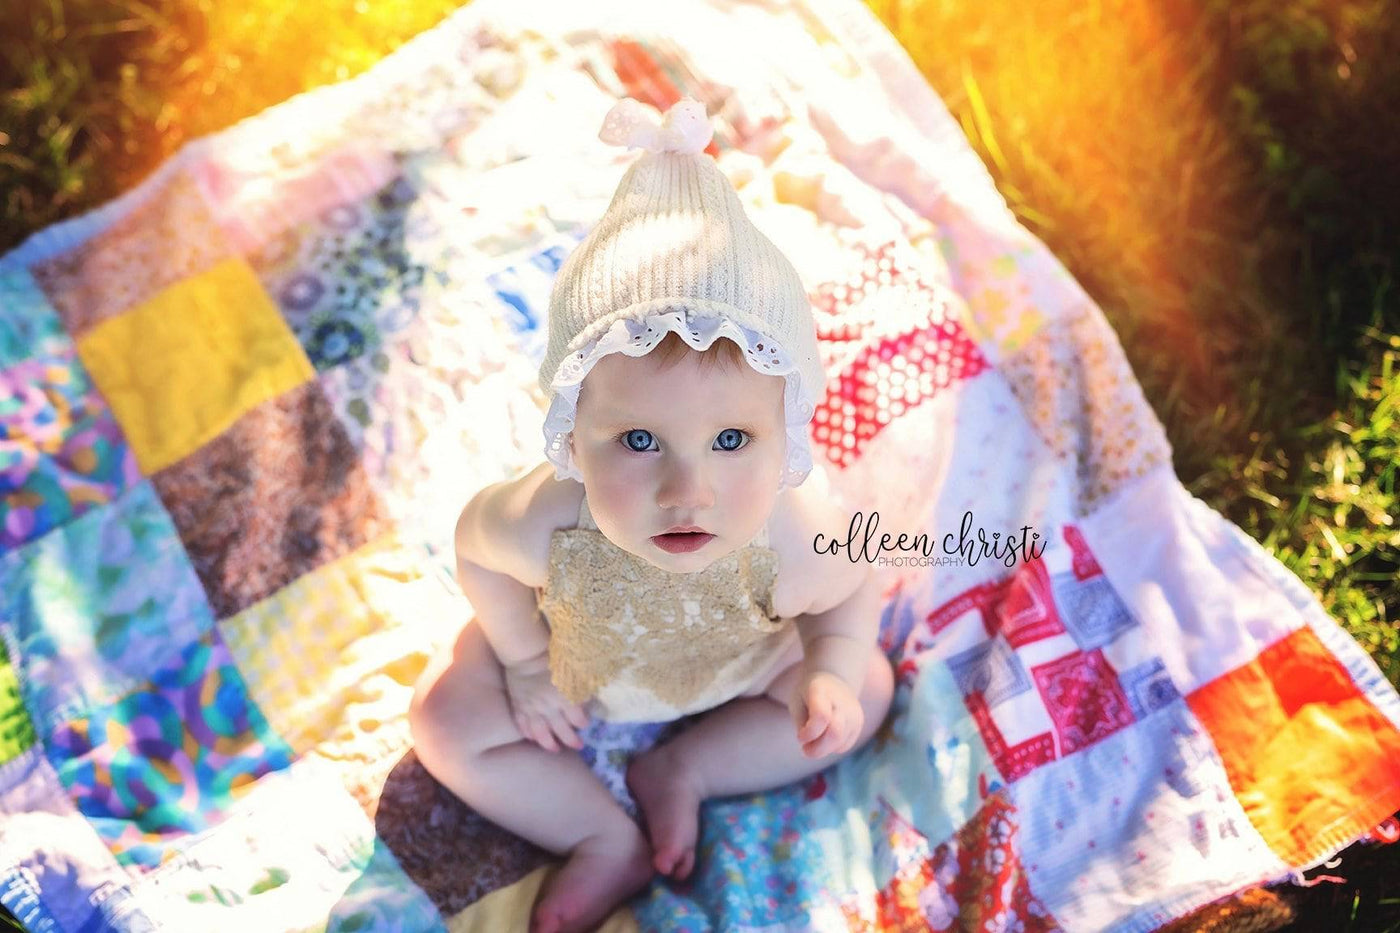 Gold Lace Embroidered Newborn Romper - Beautiful Photo Props